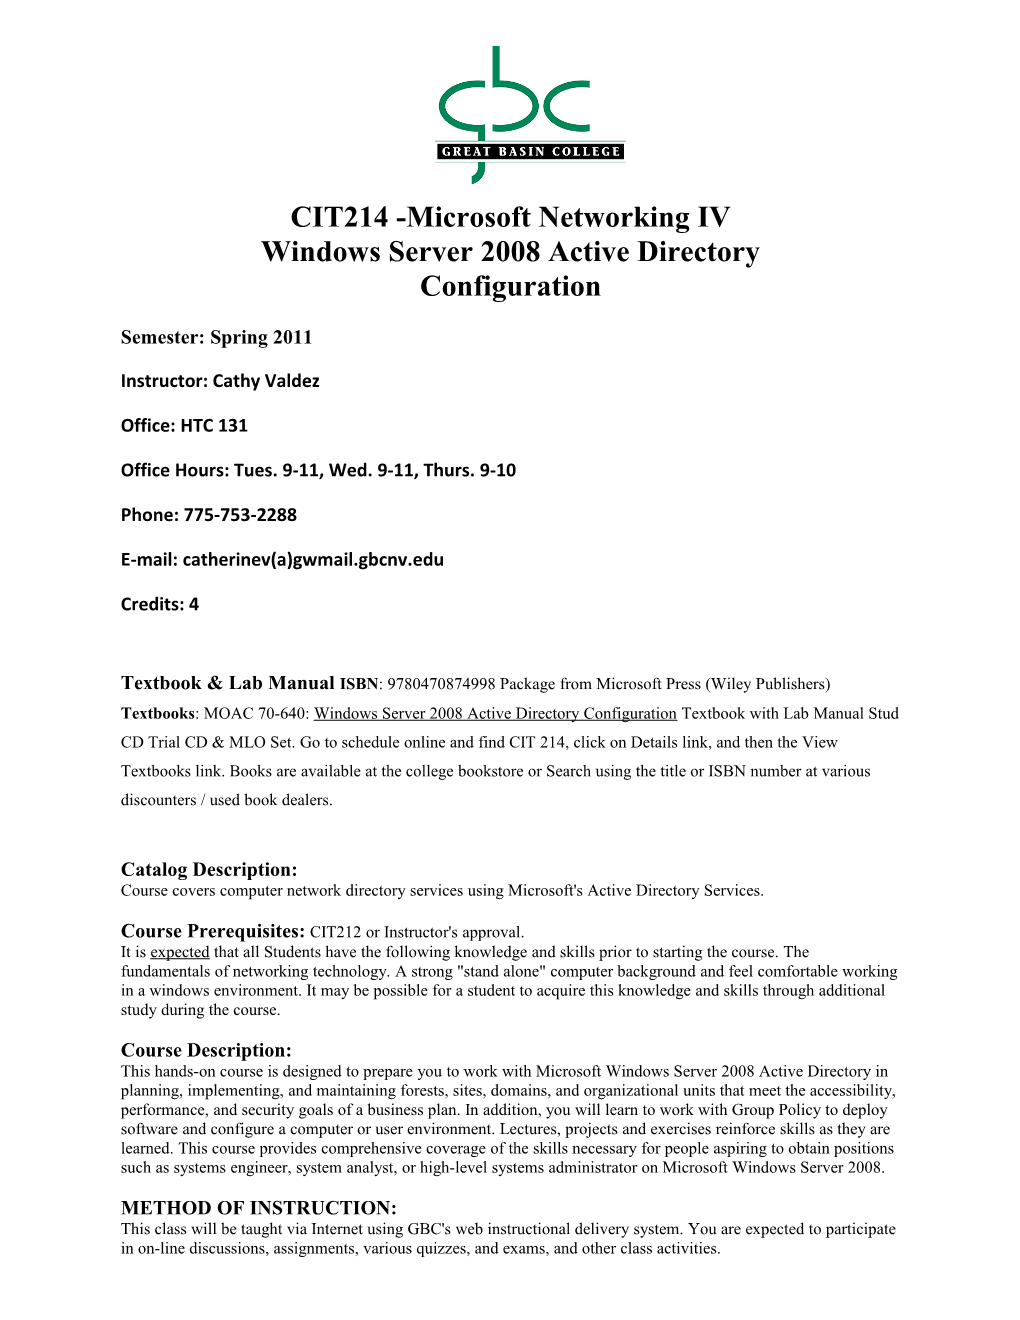 CIT214 -Microsoft Networking IV Windows Server 2008 Active Directory Configuration